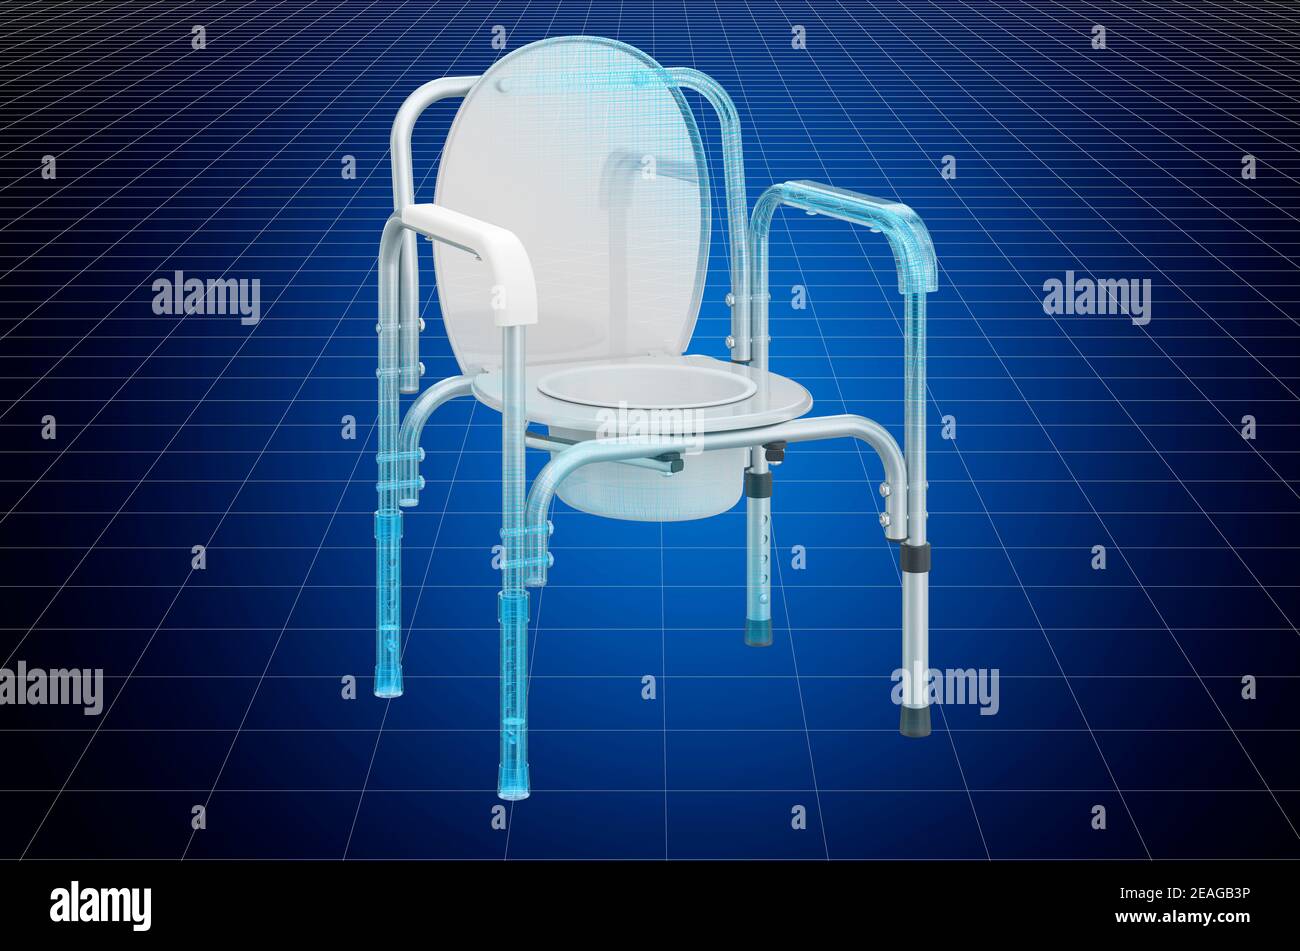 Visualisierung 3D cad Modell Handicap Tragbarer Toilettensitz